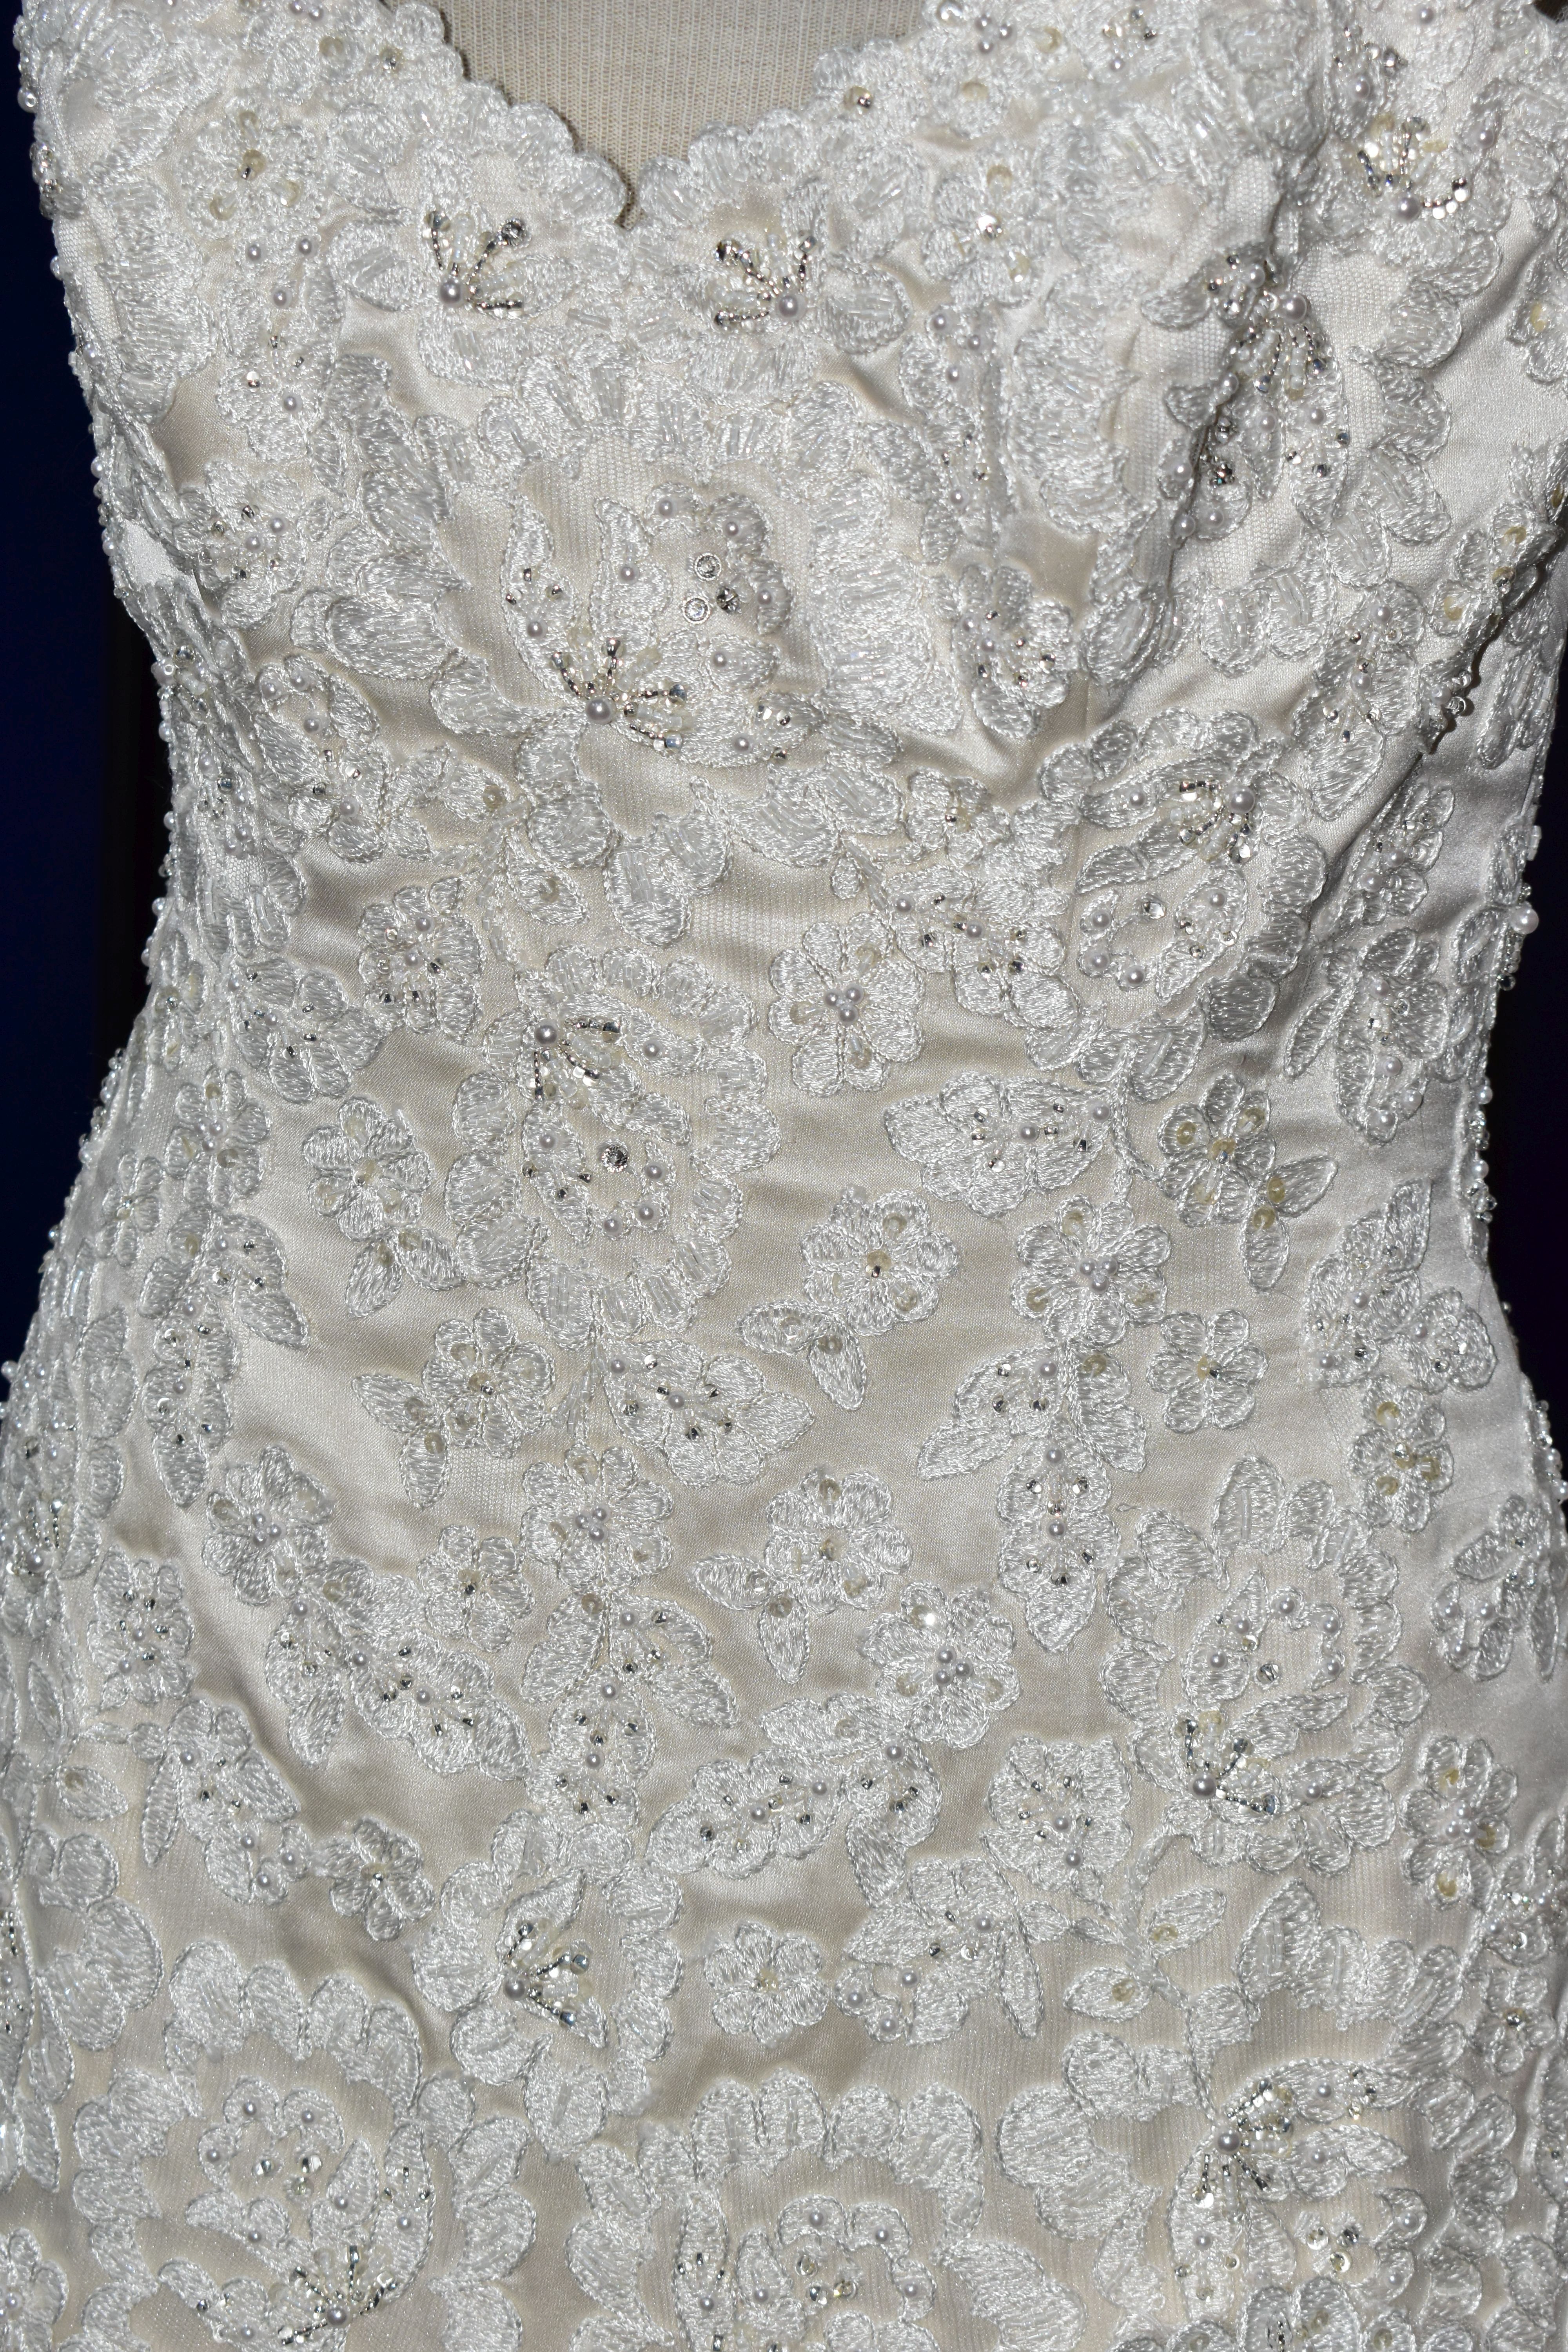 WEDDING DRESS, 'David Tutera' champagne, size 6, satin, strapless, beaded appliques (1) - Image 3 of 10